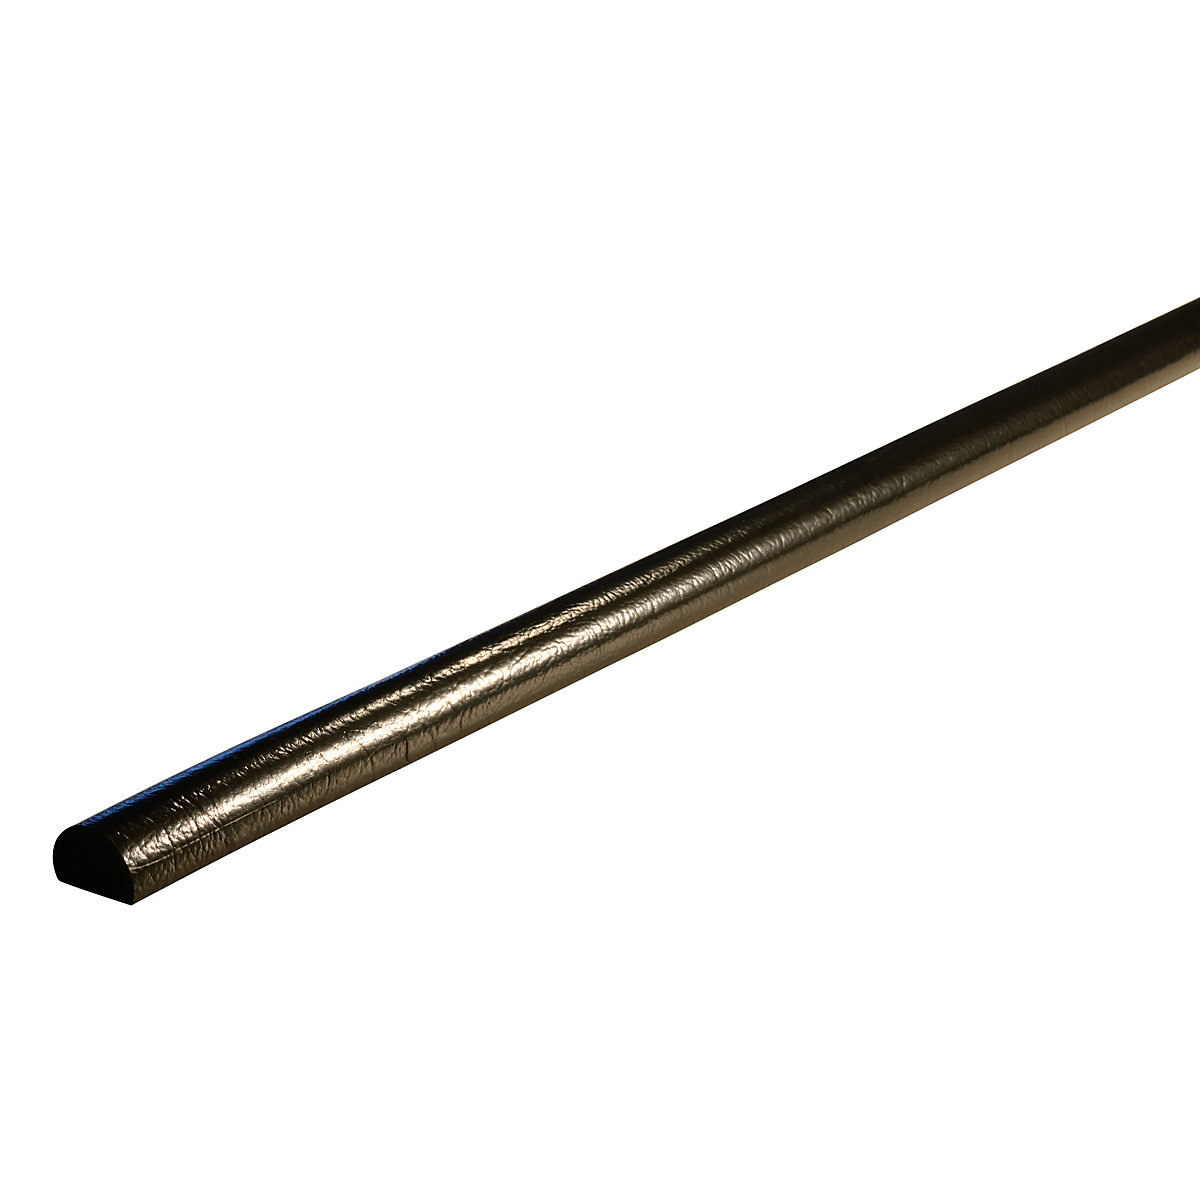 Knuffi®-oppervlaktebescherming – SHG, type C, stuk van 1 m, zwart-21